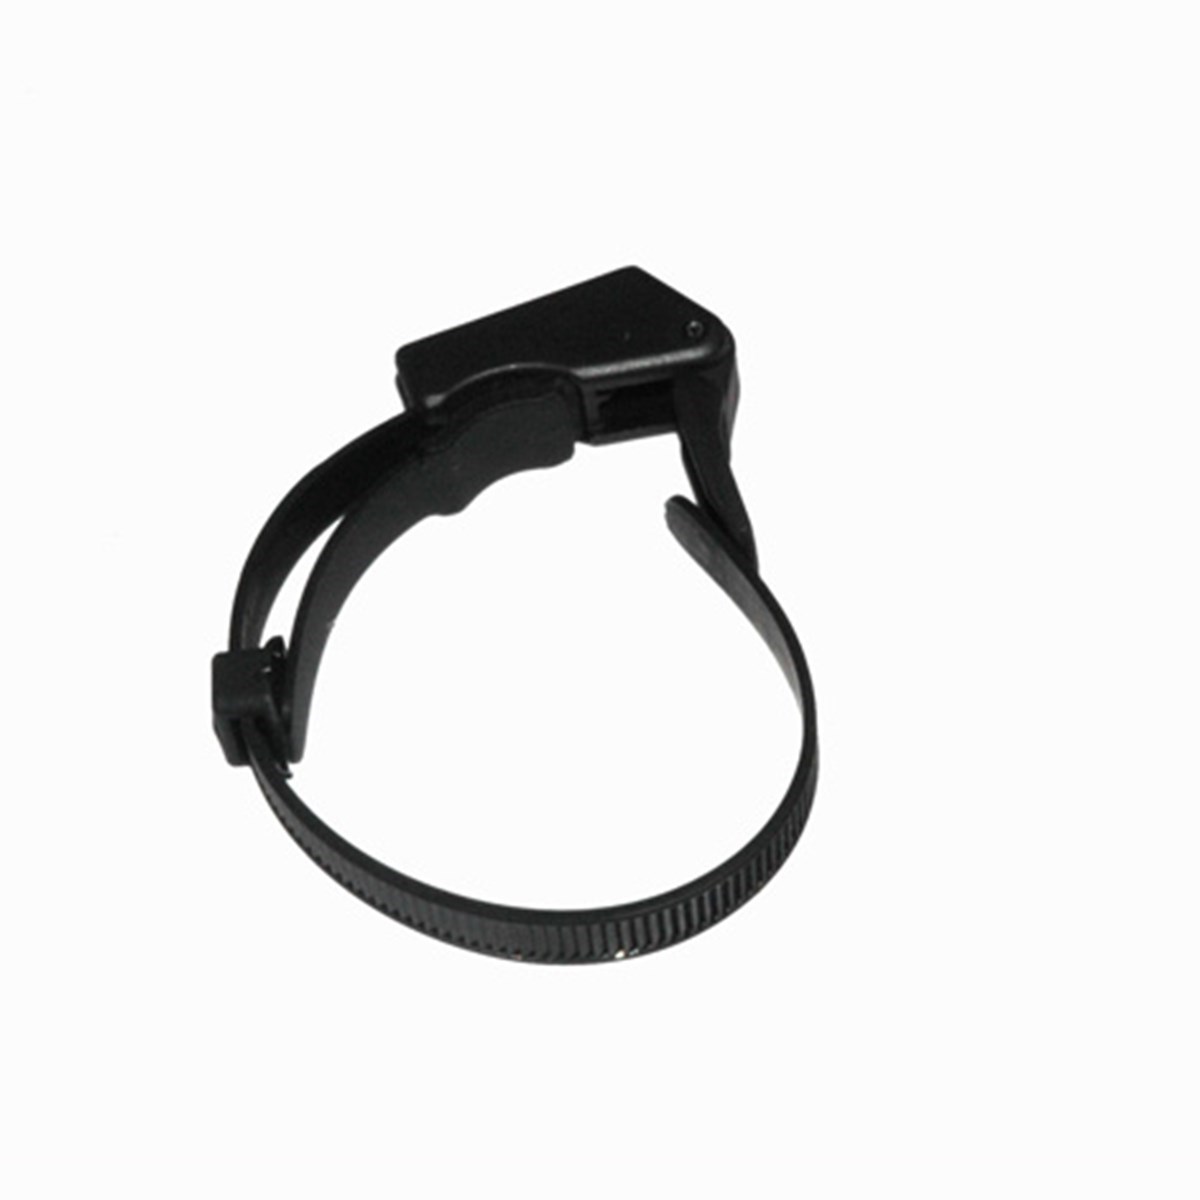 Cateye EL450 Bracket Plus Strap (H35) product image